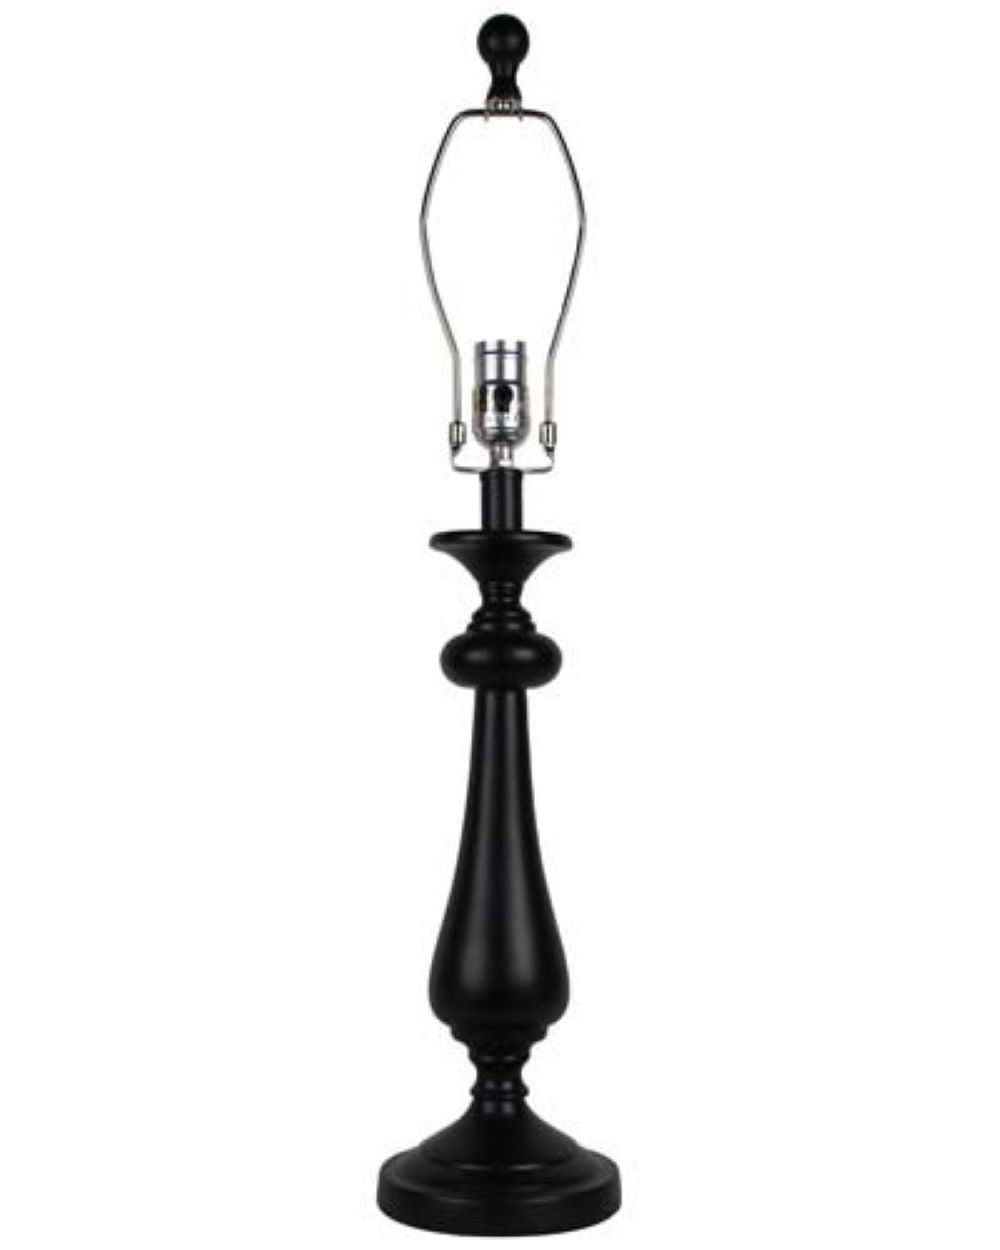 Black Candlestick Whimsical Dandelion Shade Table Lamp